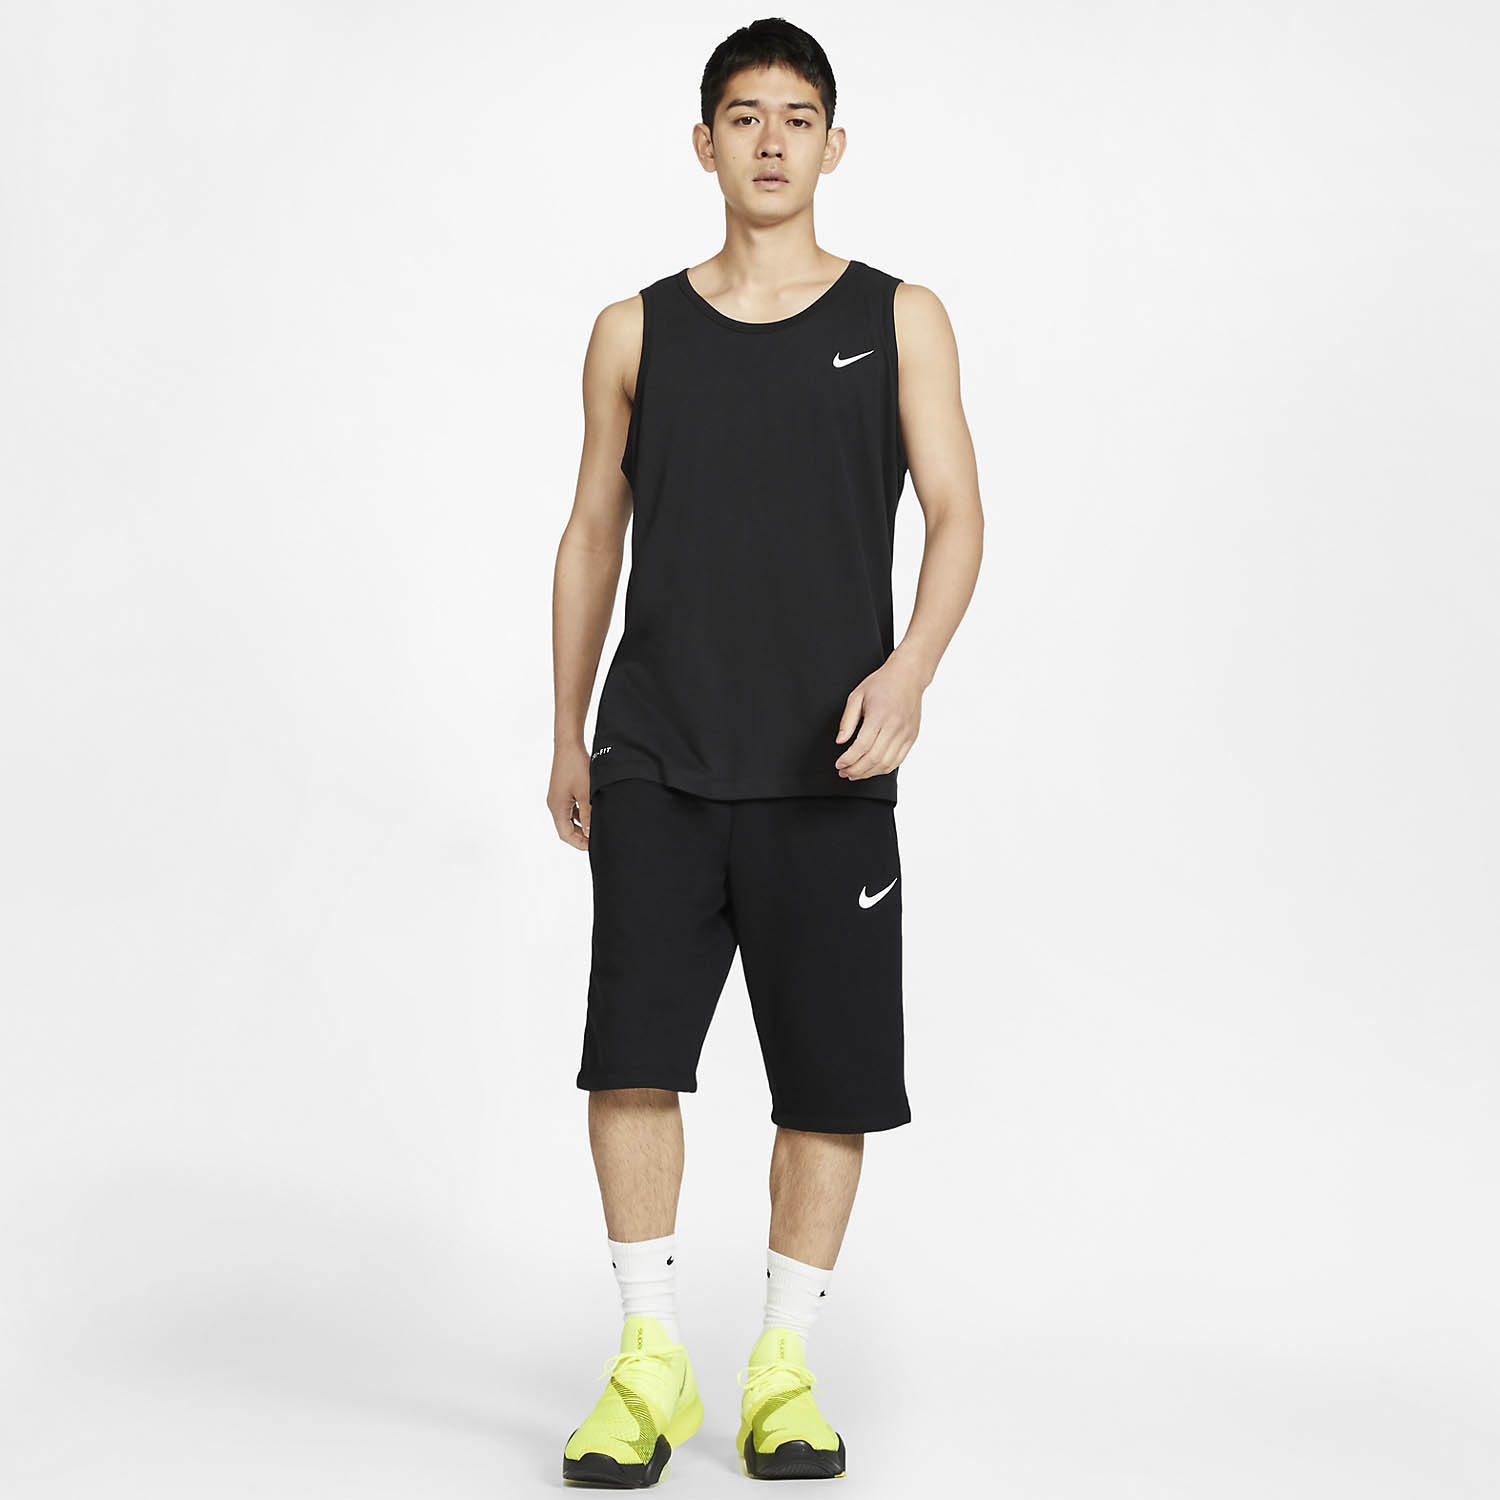 Nike Solid Dri-FIT Top - Black/White